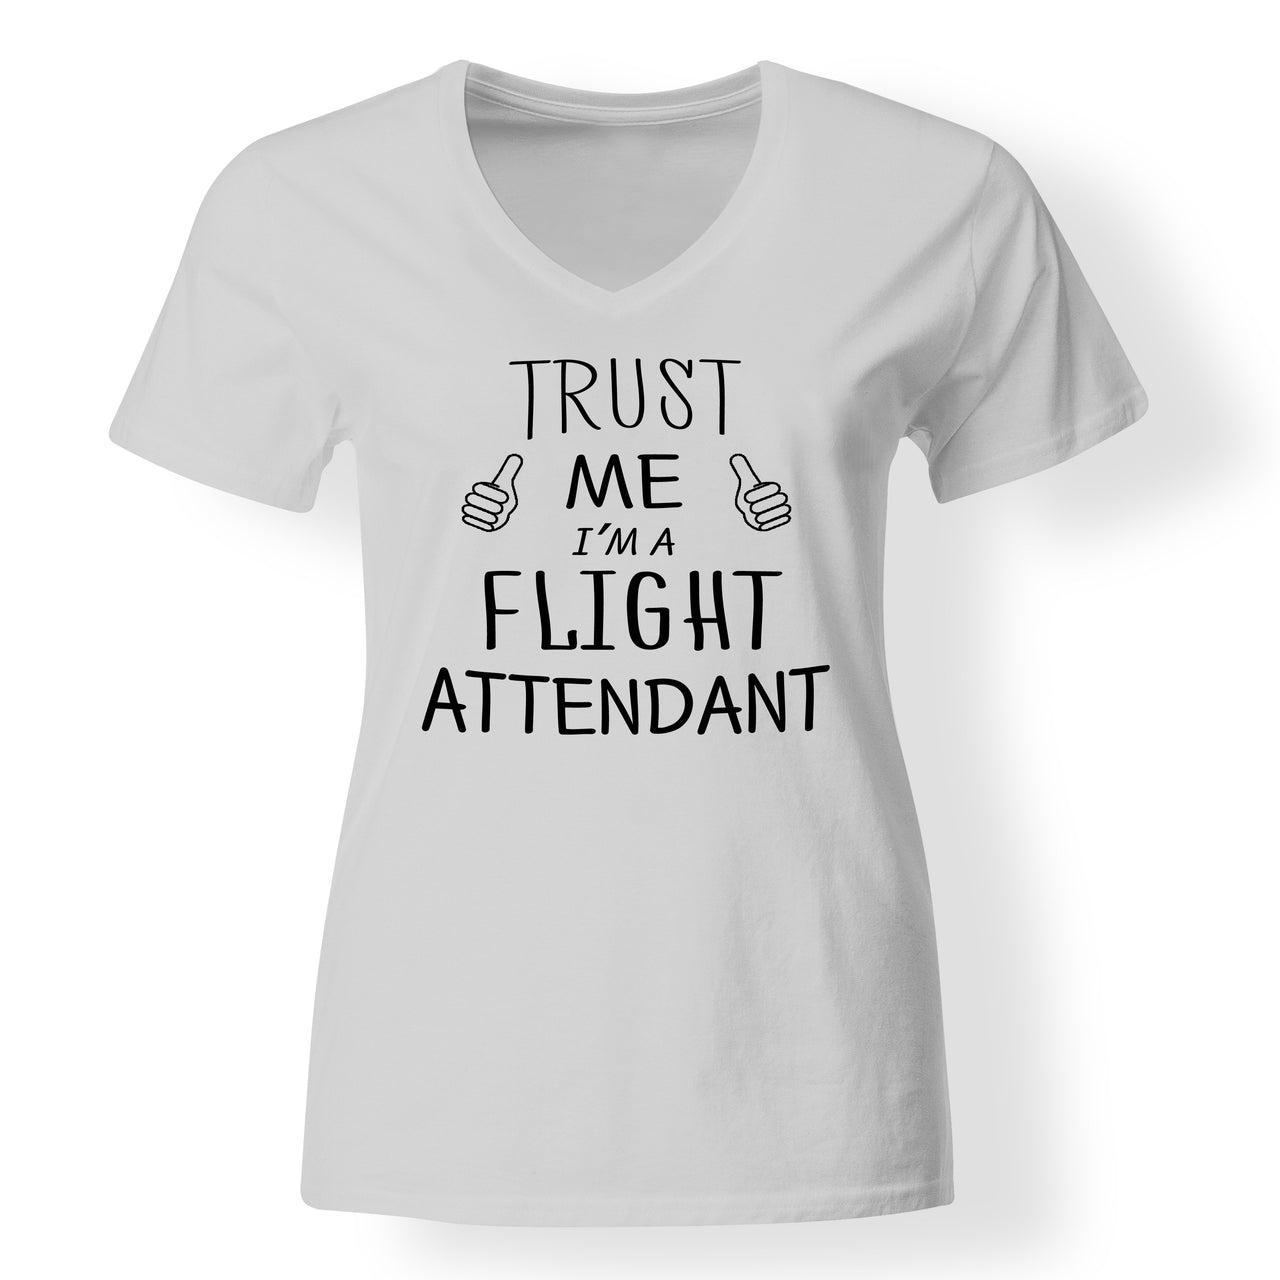 Trust Me I'm a Flight Attendant Designed V-Neck T-Shirts